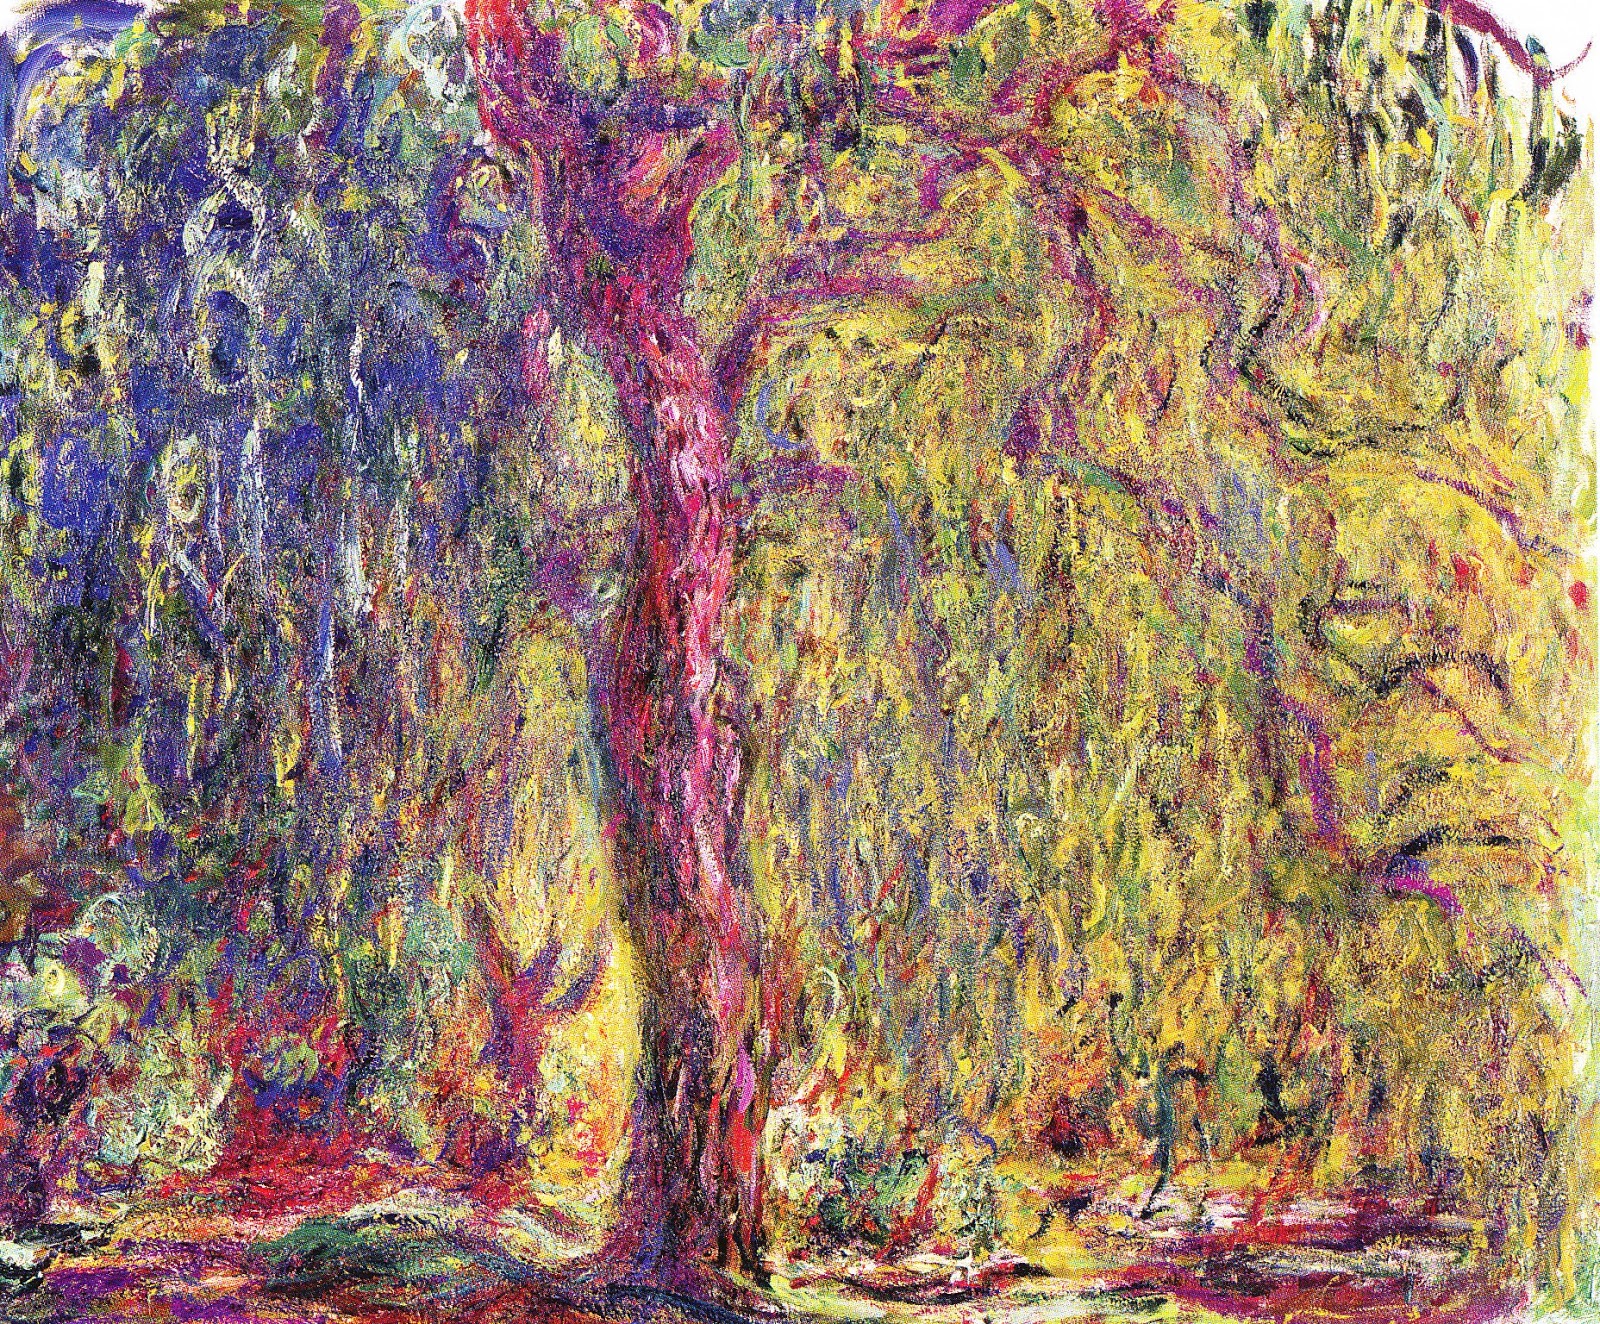 Claude+Monet-1840-1926 (674).jpg